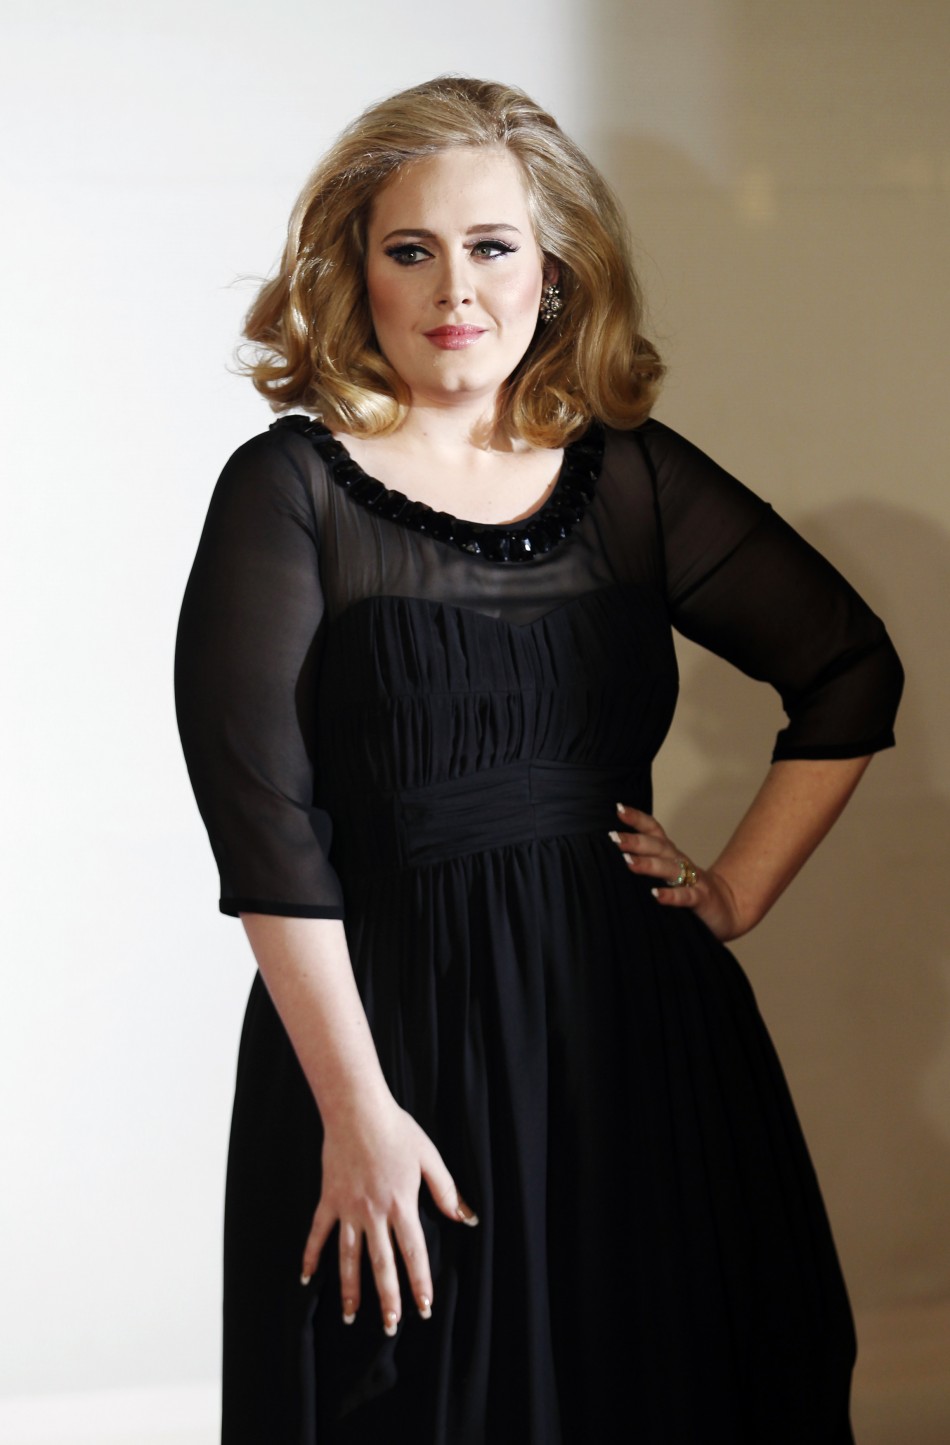 Multiple Grammy Award winner Adele arrives for the BRIT Music Awards at the O2 Arena in London